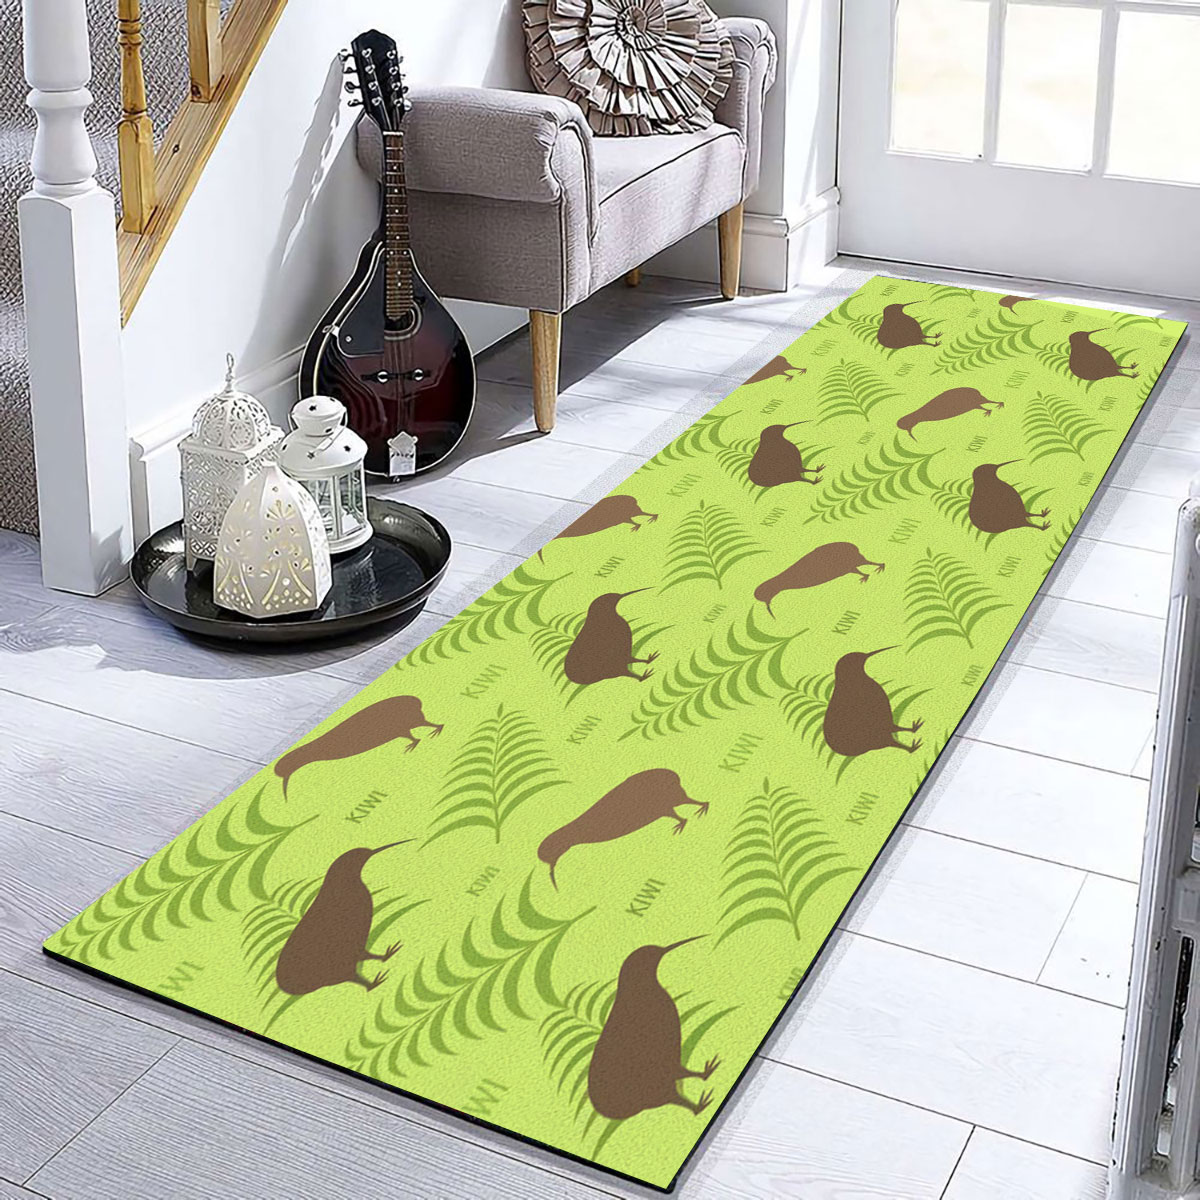 Green Leaf Kiwi Bird Runner Carpet 6